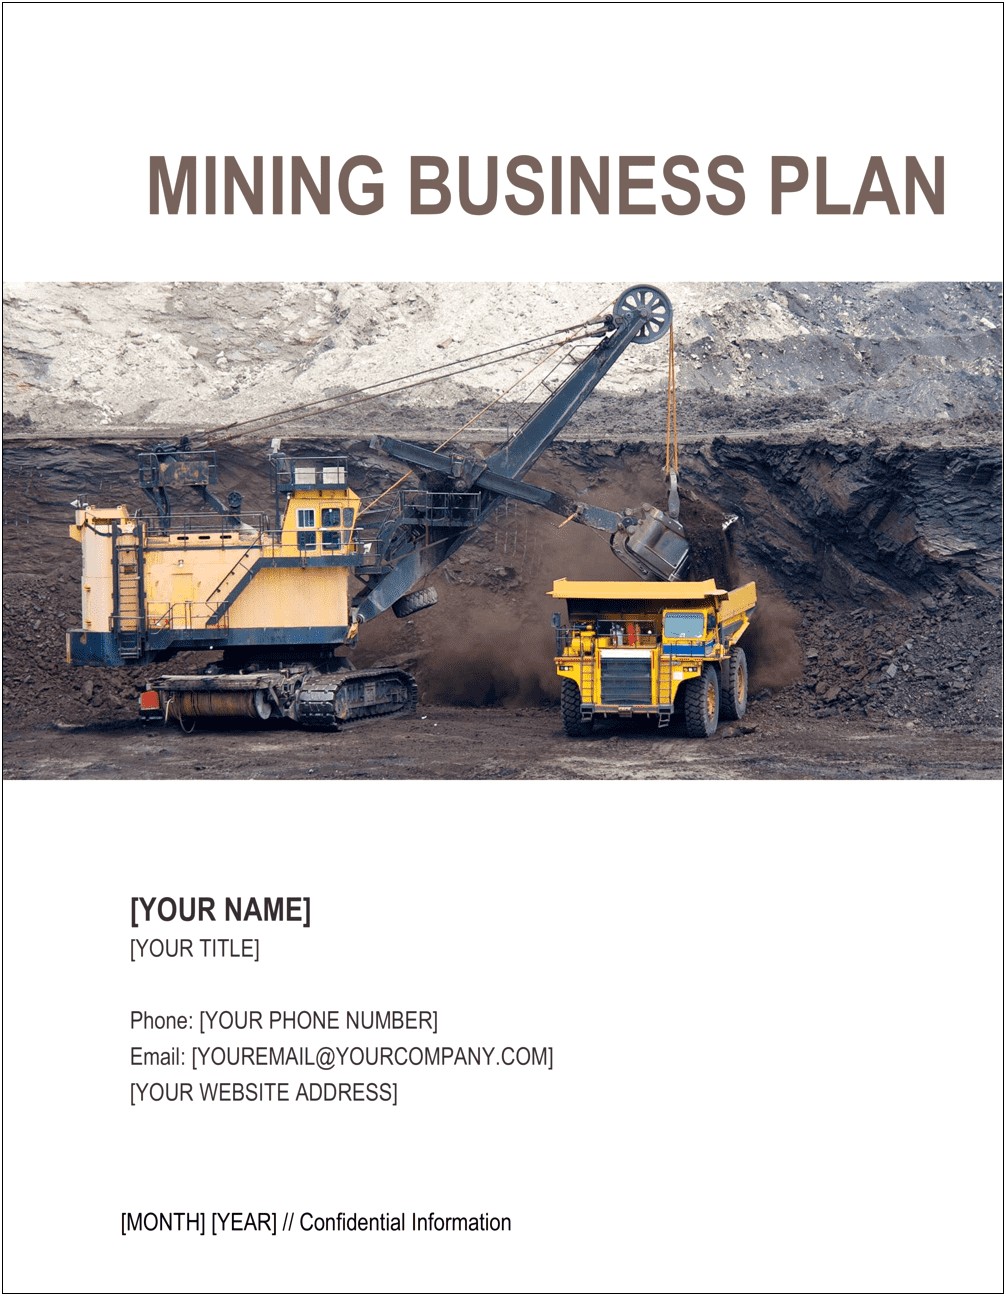 Adobe Business Plan Template Free Mining